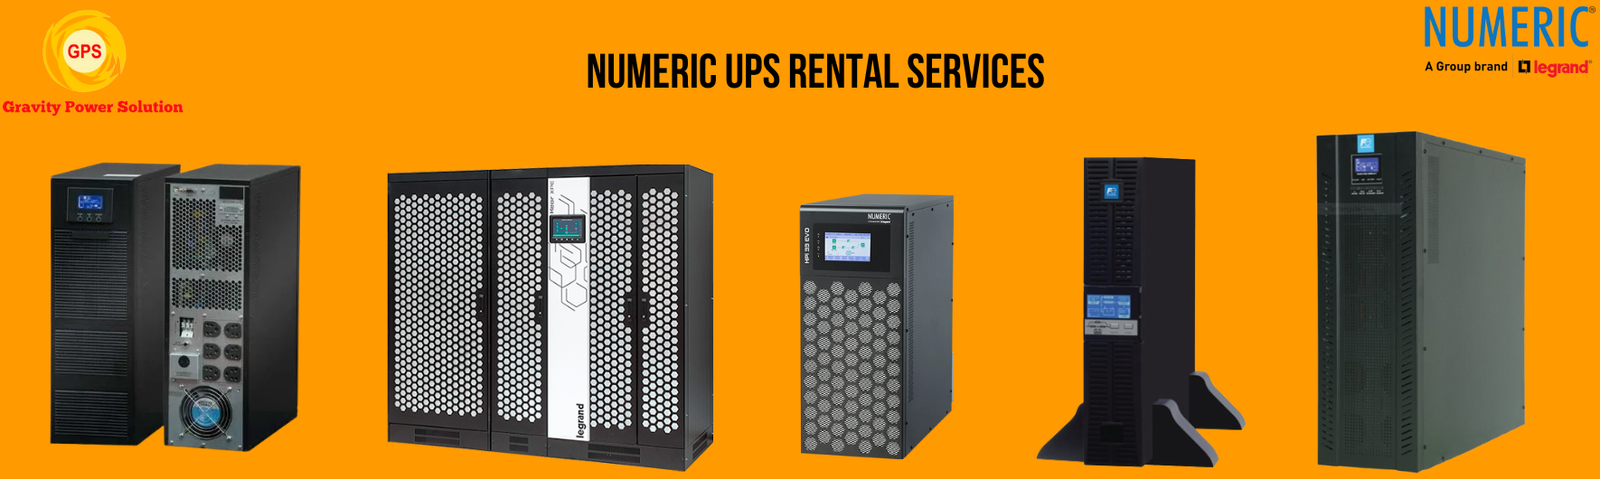 Numeric UPS Rental Services